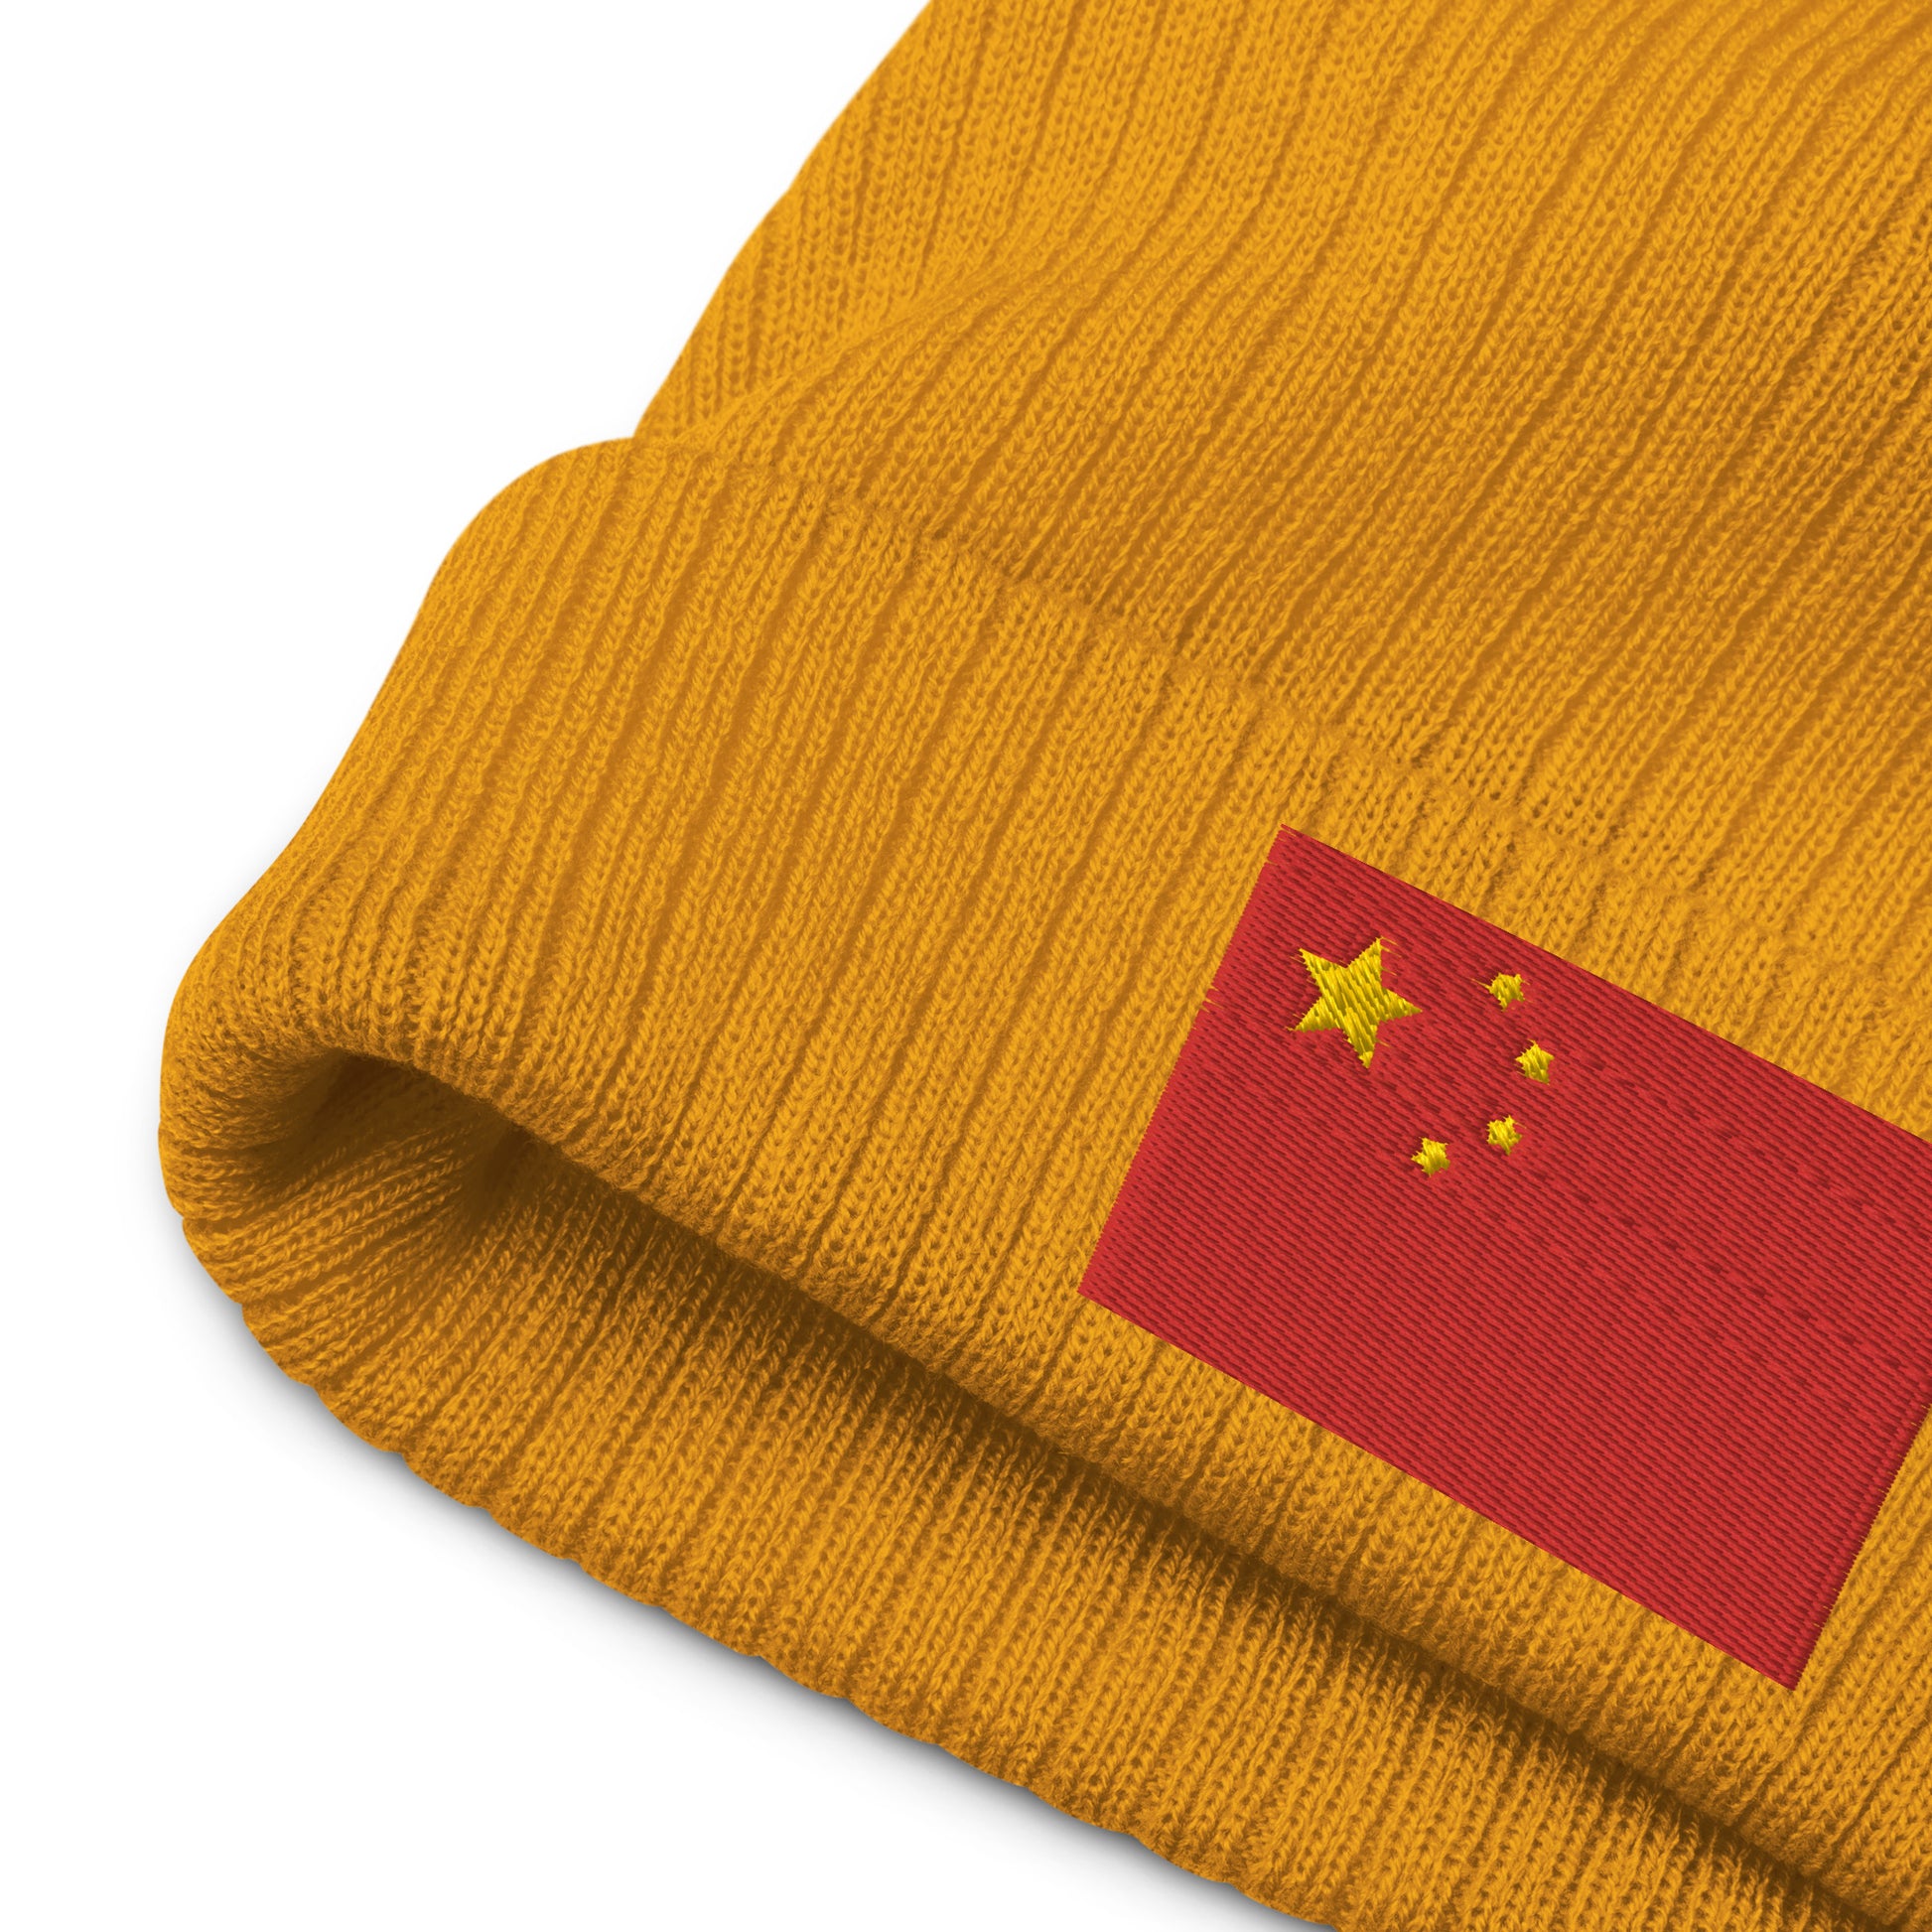 China hat